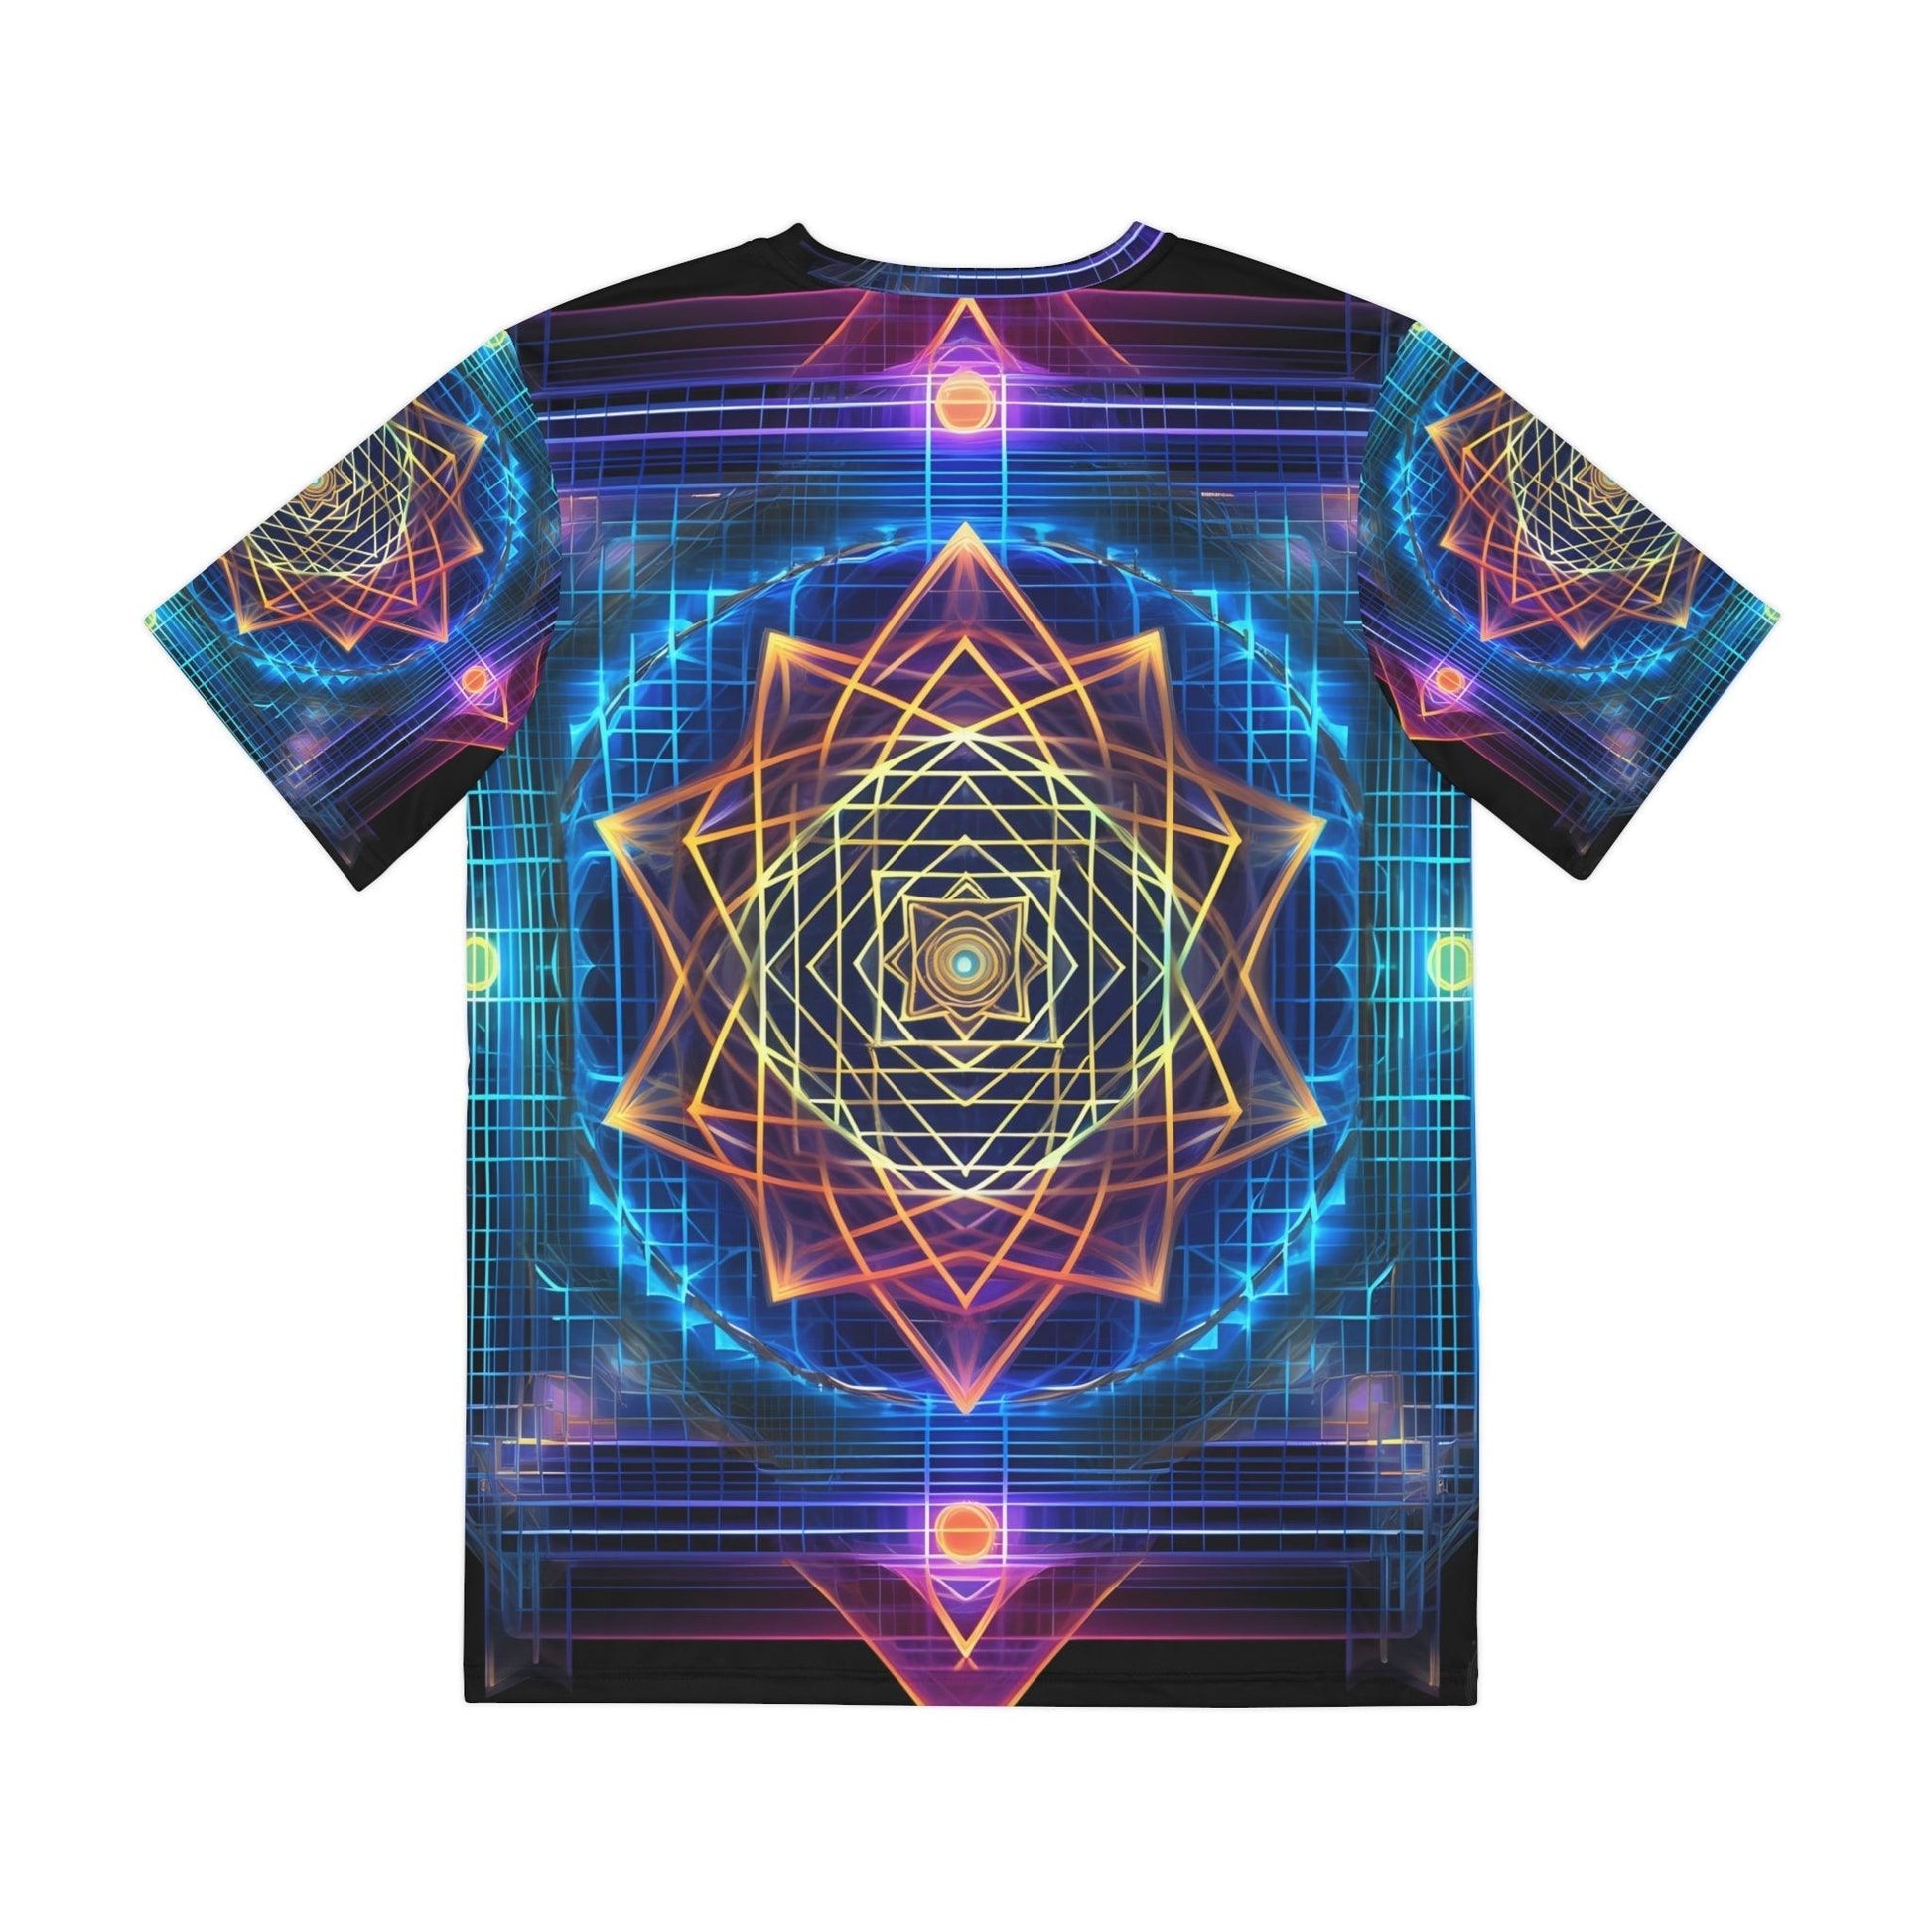 Sri Yantra 3D Sacred Geometry Octane Colorful Symmetrical Sublimation-Digital AI Art T-Shirt for Street or Festival Wear - Alchemystics.org